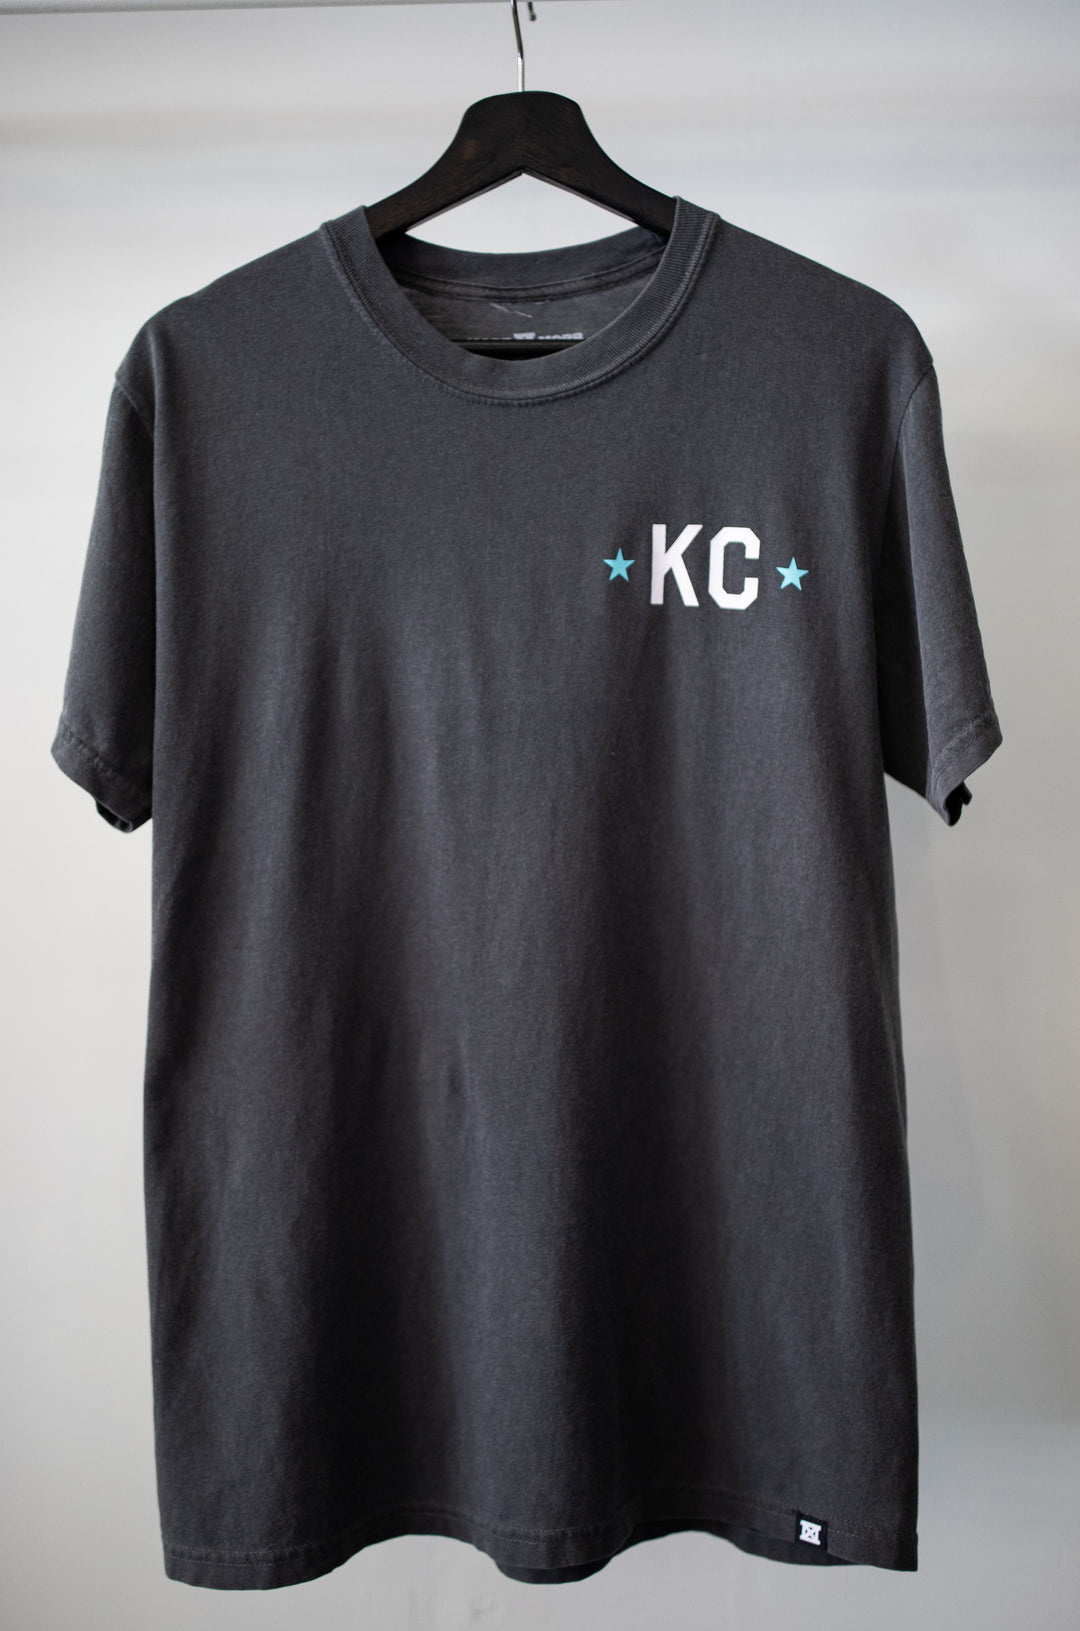 KC Current Logo Brands Clear Tote Bag – Kansas City Current Shop